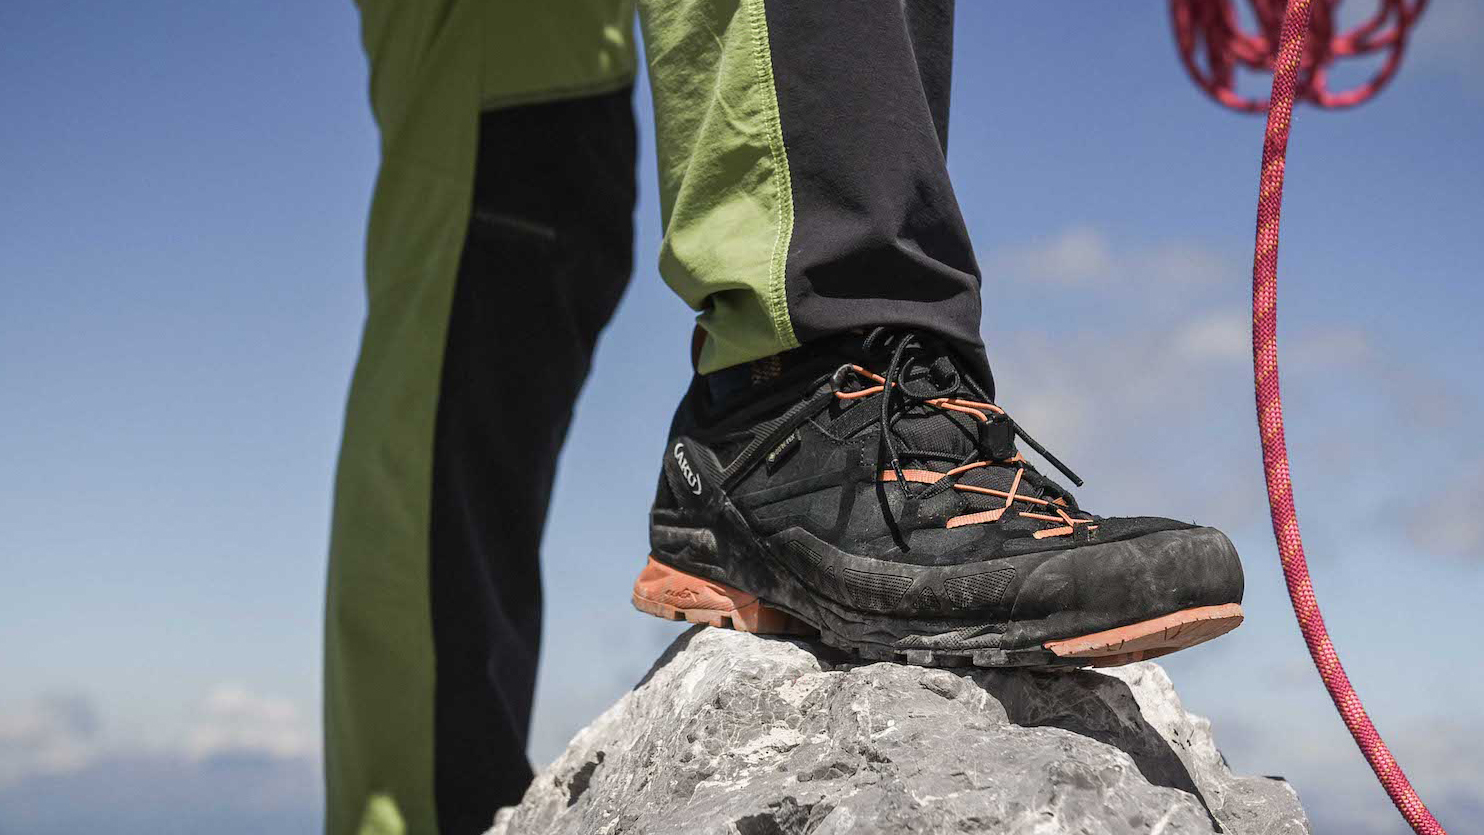 The Aku Rock DFS GTX approach shoe on a summit